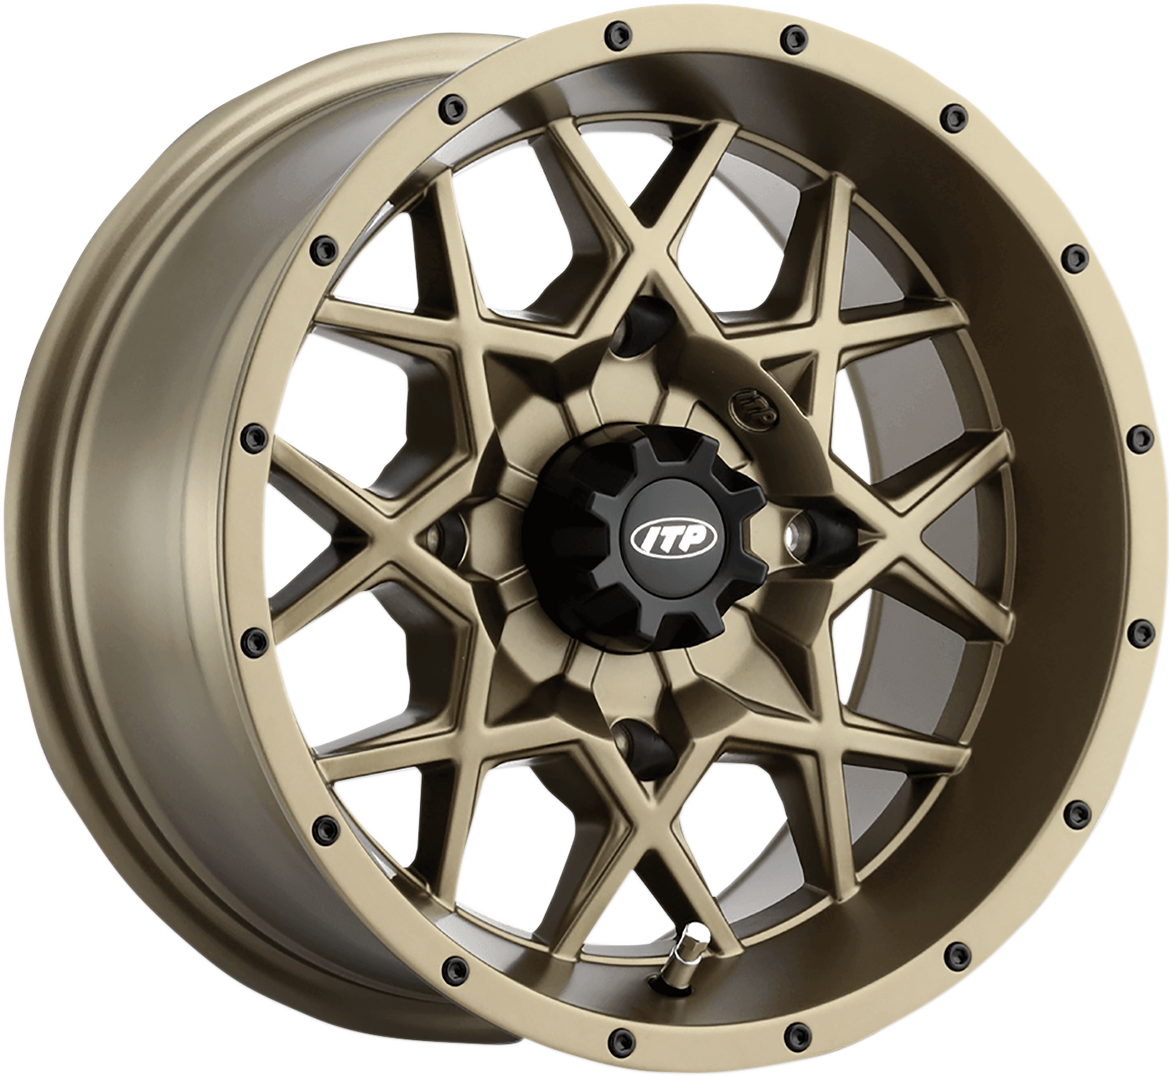 ITP Wheel - Hurricane - Front/Rear - Bronze - 18x6.5 - 4/137 - 4+2.5 (+10 mm) 1822515729B